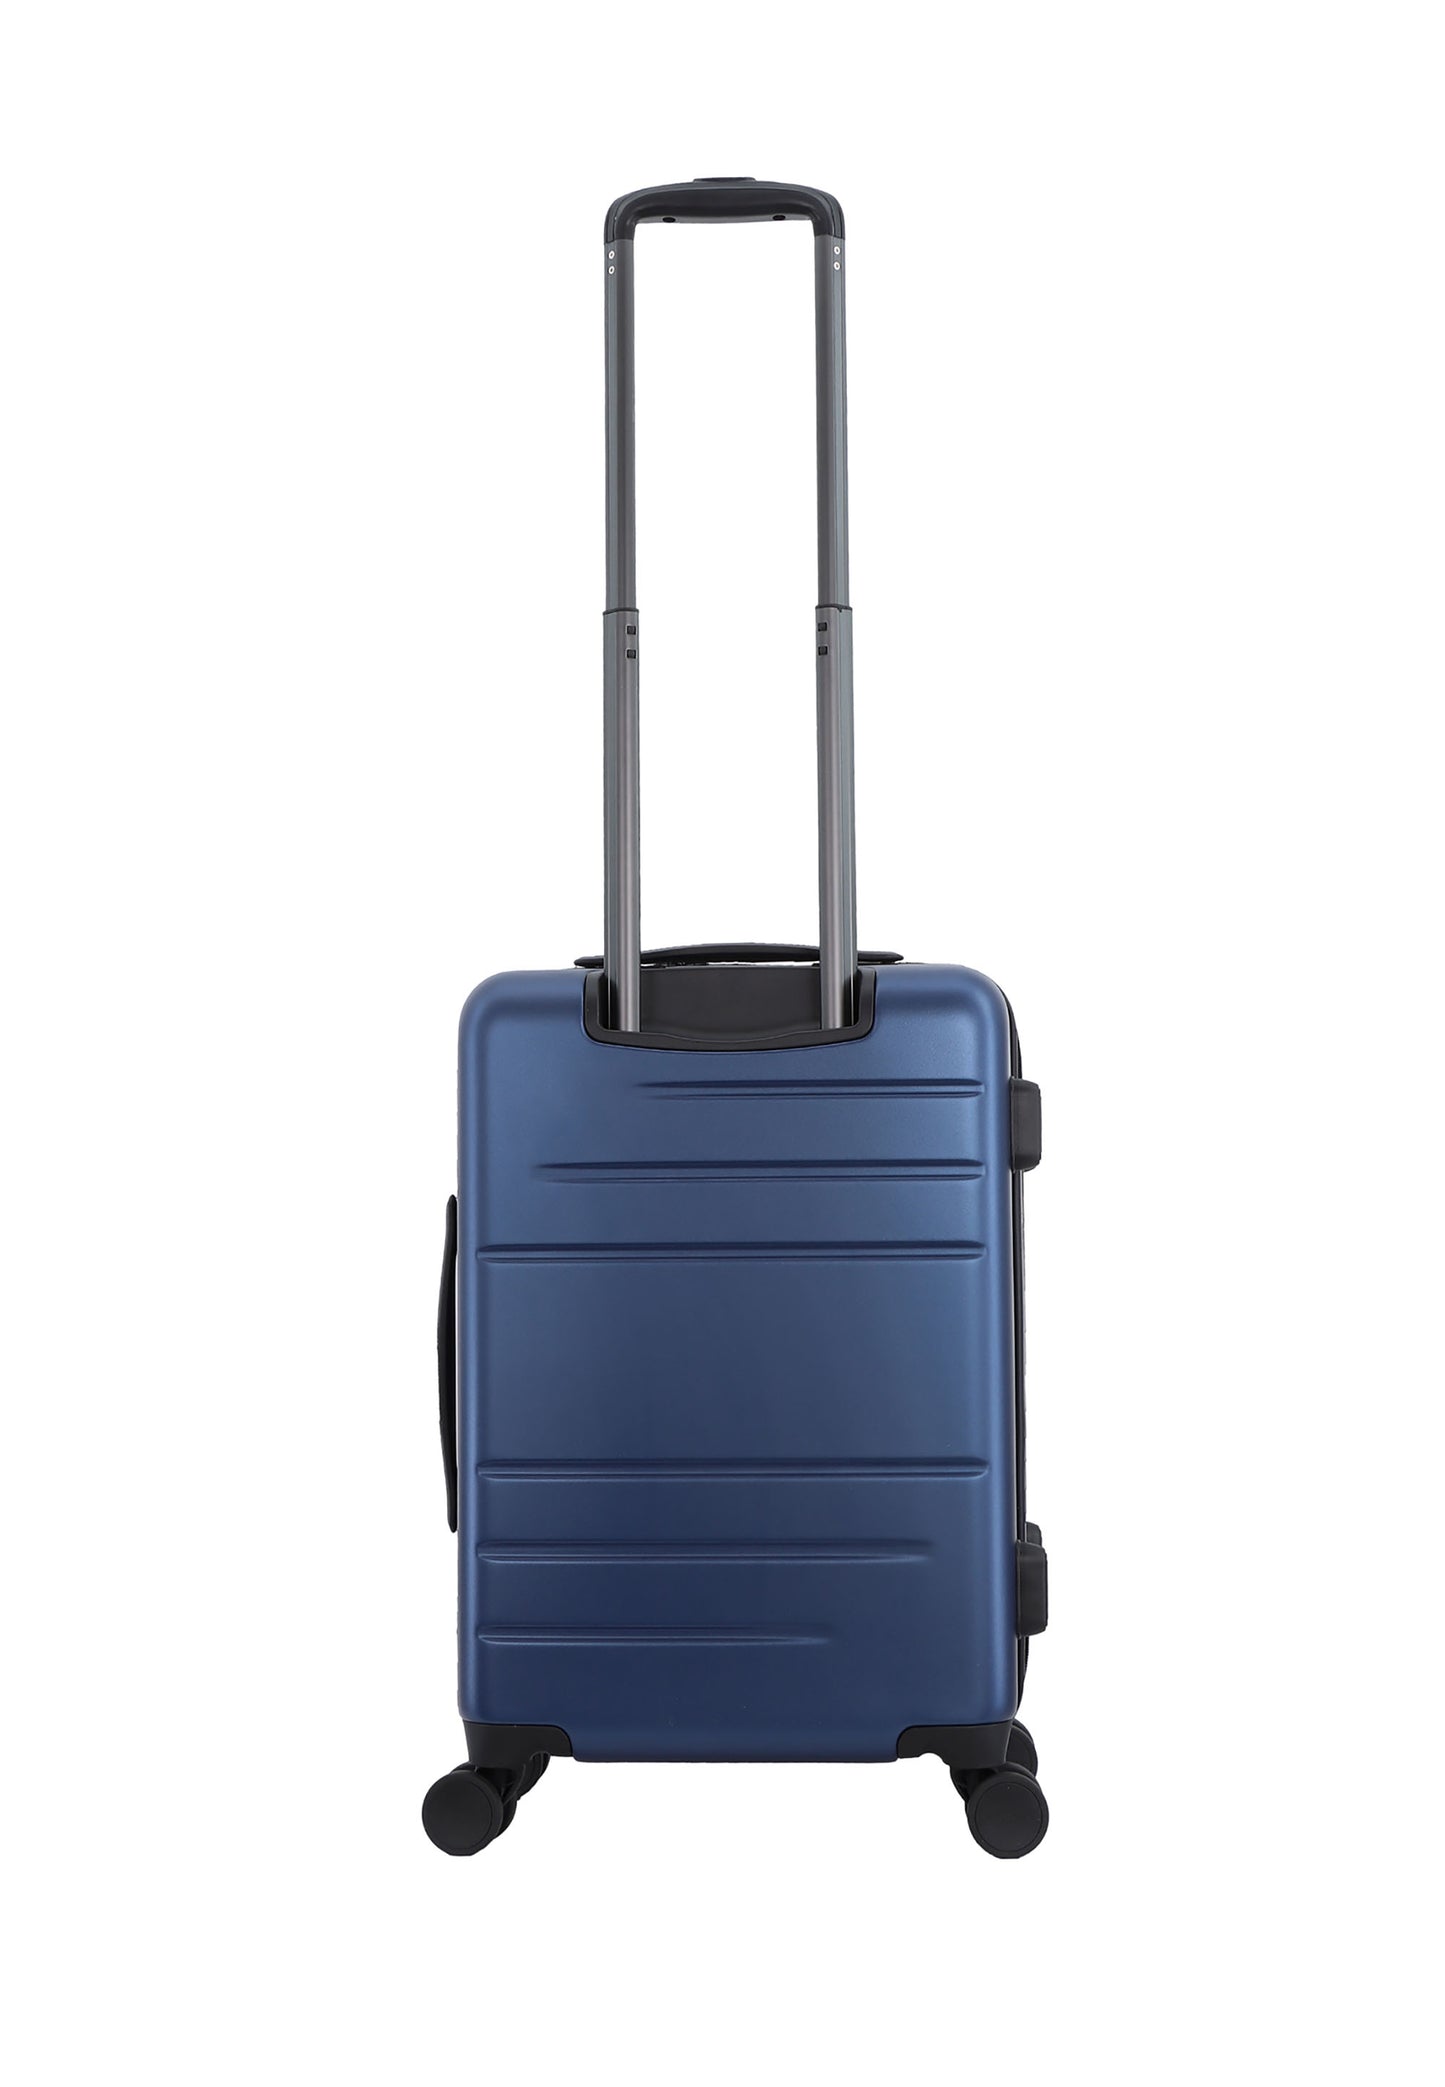 Discovery Handbagage Harde Koffer / Trolley / Reiskoffer - 56 cm (Small) - Patrol - Blauw